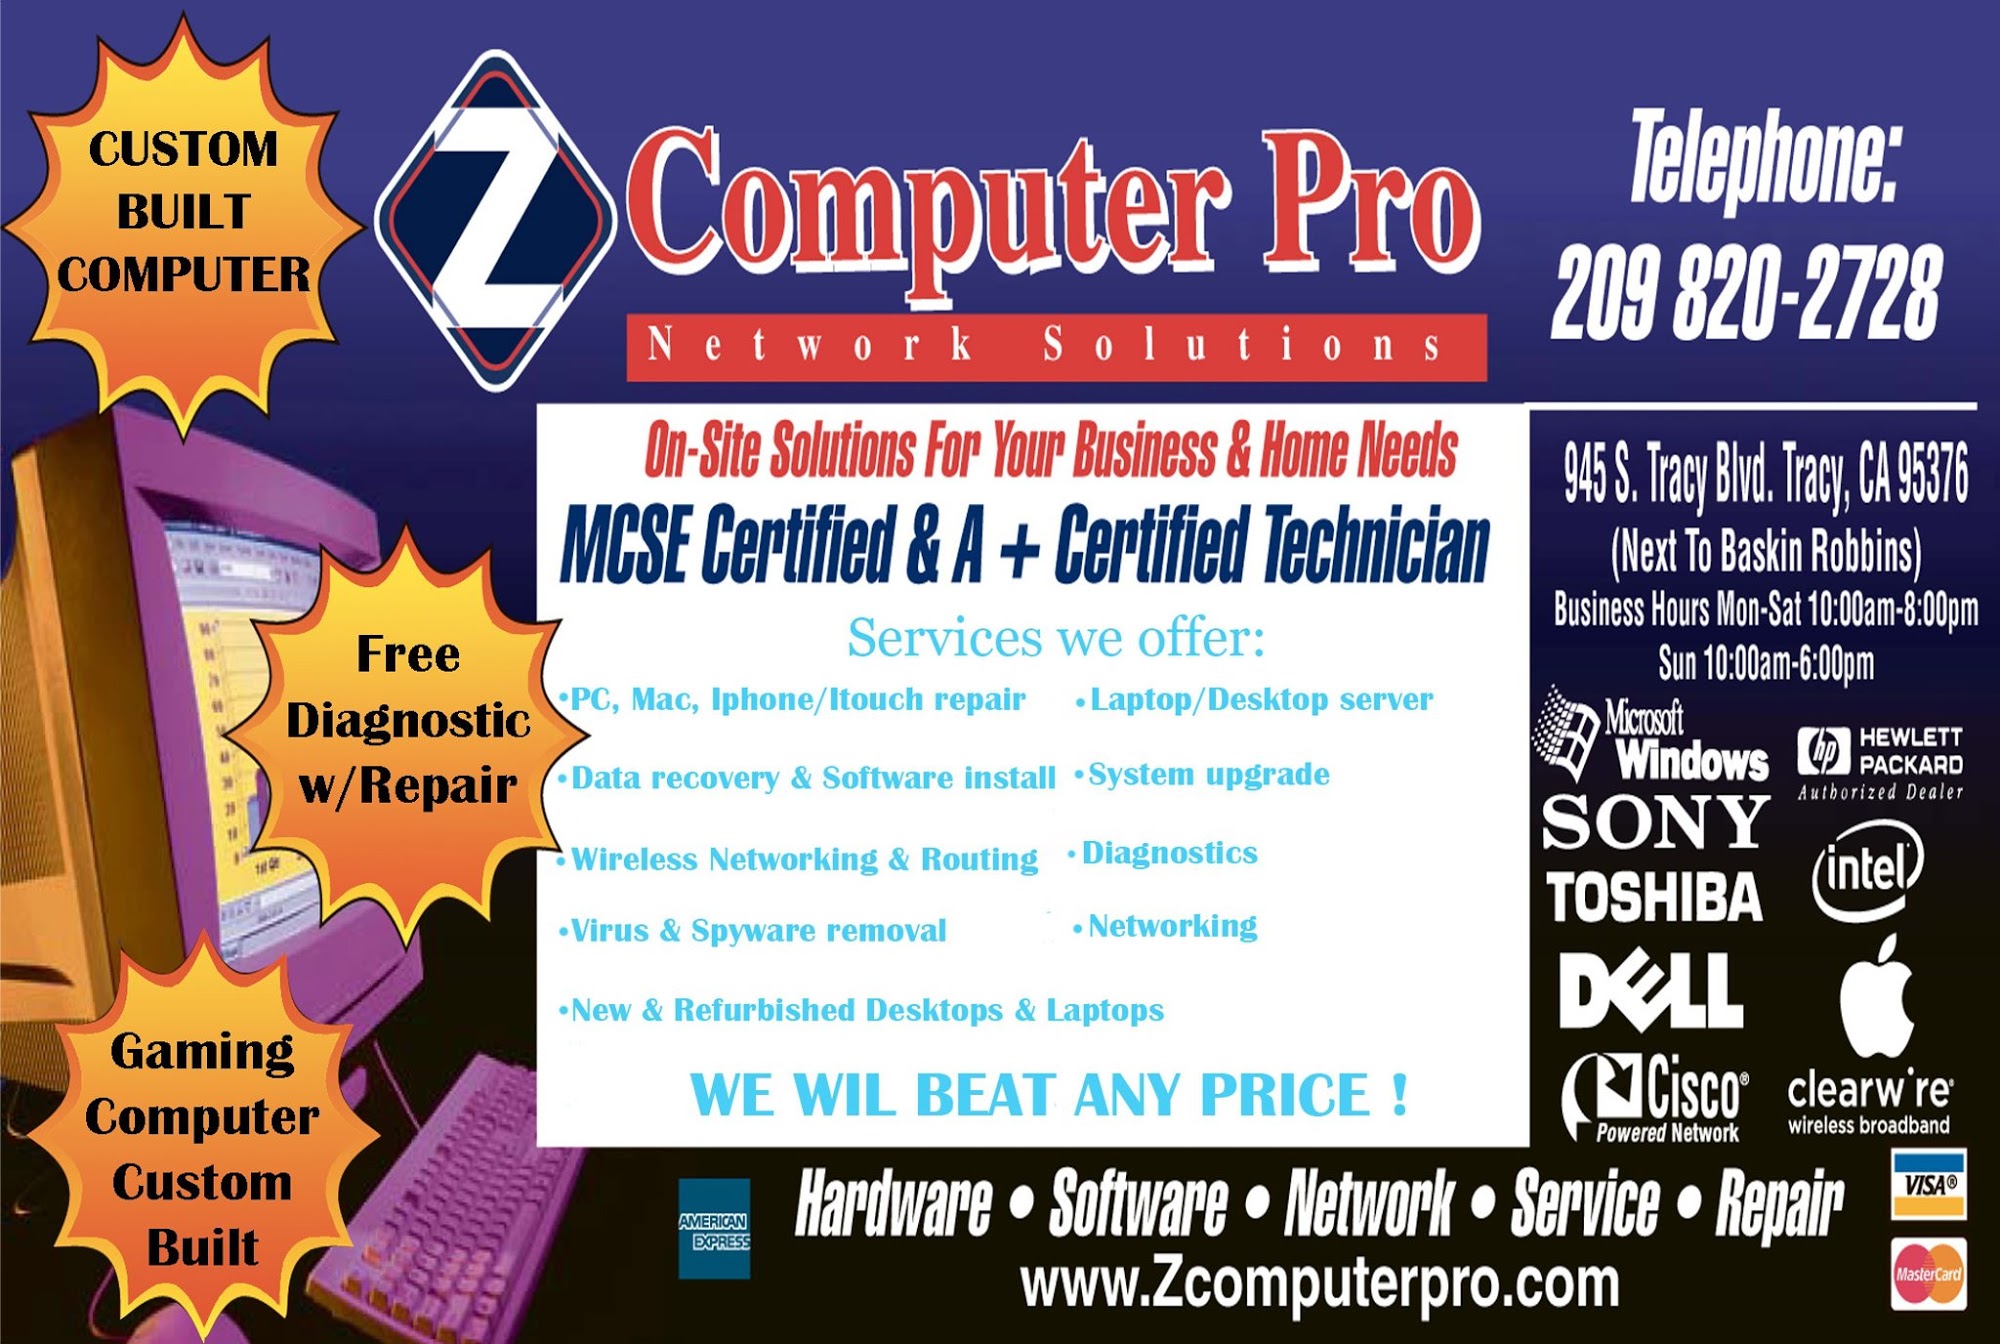 Z Computer Pro